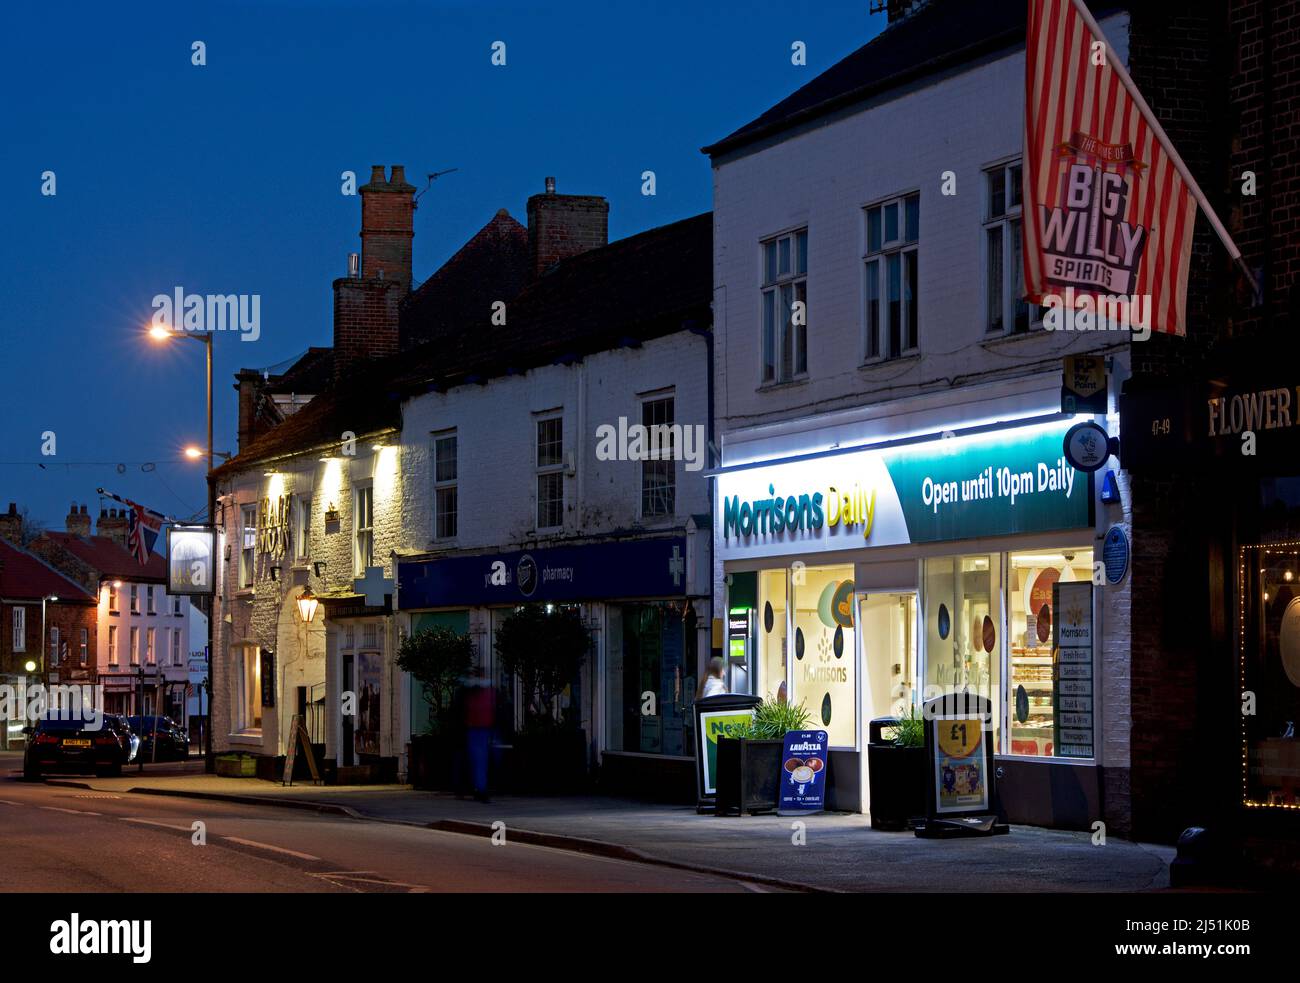 Morrisons Daily negozio in High Street, al tramonto, Market Weighton, East Yorkshire, Inghilterra Regno Unito Foto Stock